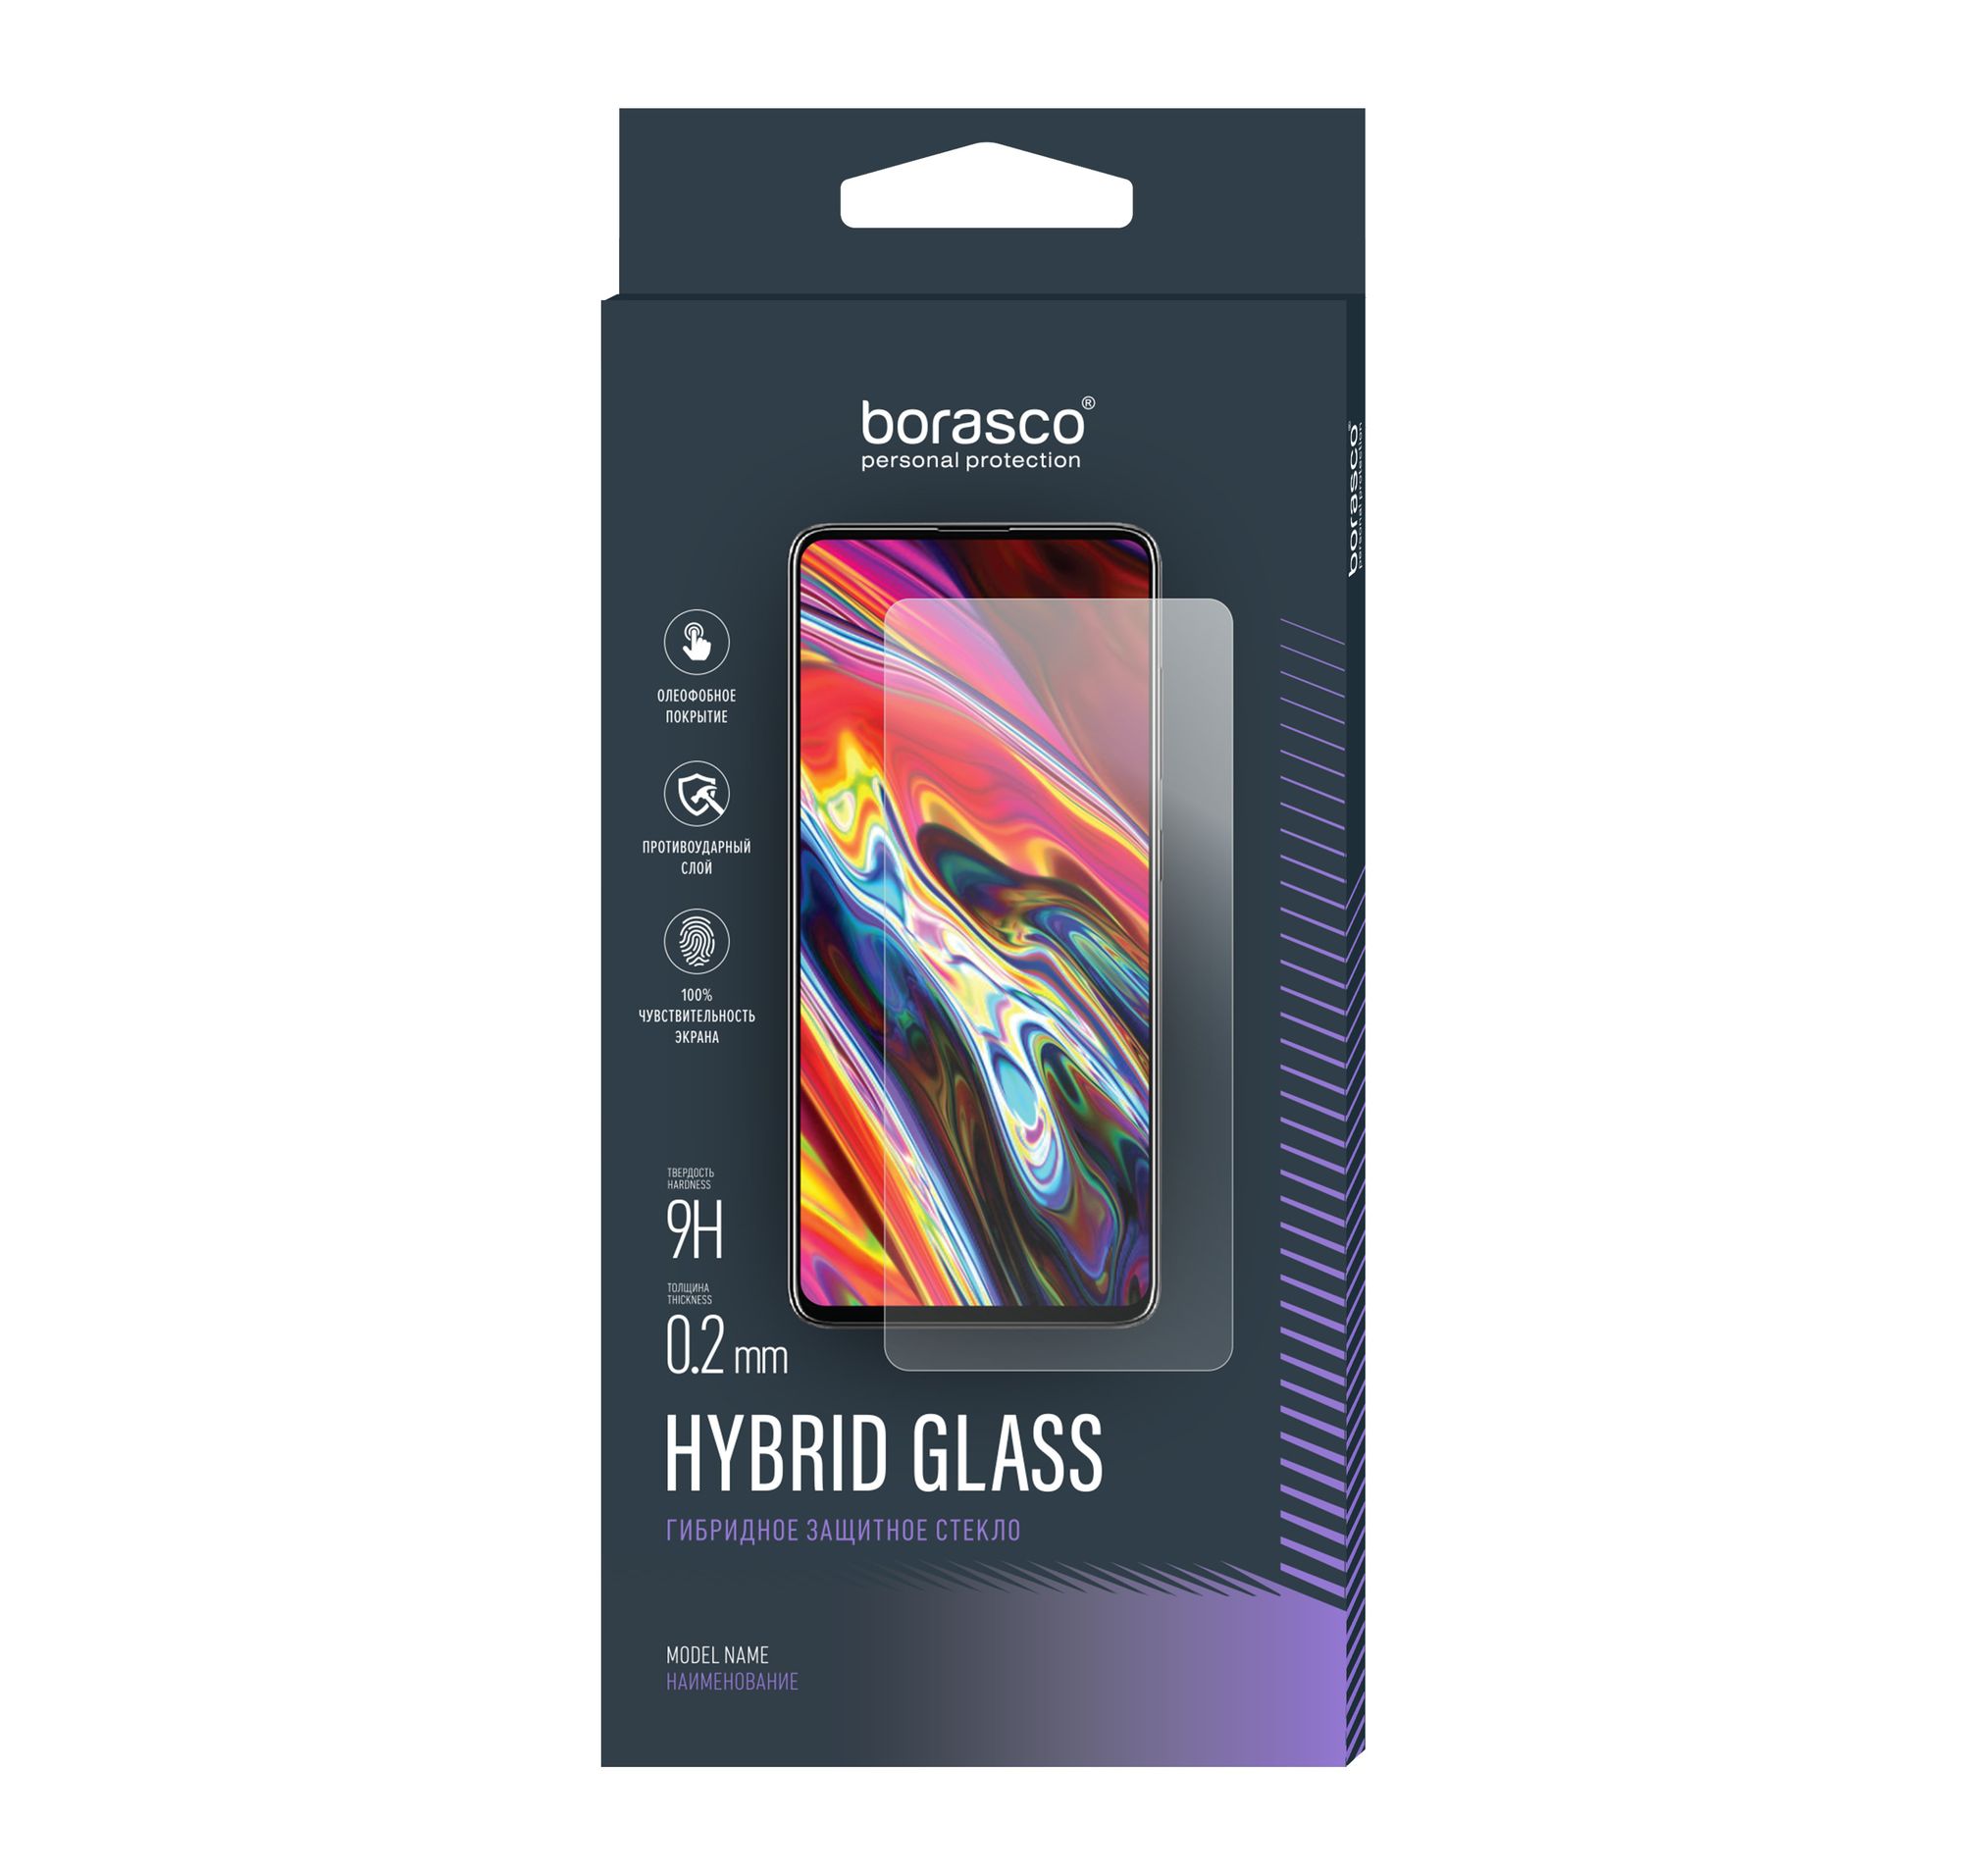 Стекло защитное Hybrid Glass VSP 0,26 мм для iPhone 7 Plus/8 Plus усиленное защитное стекло для iphone 6 plus 6s plus 7 plus 8 plus 18d